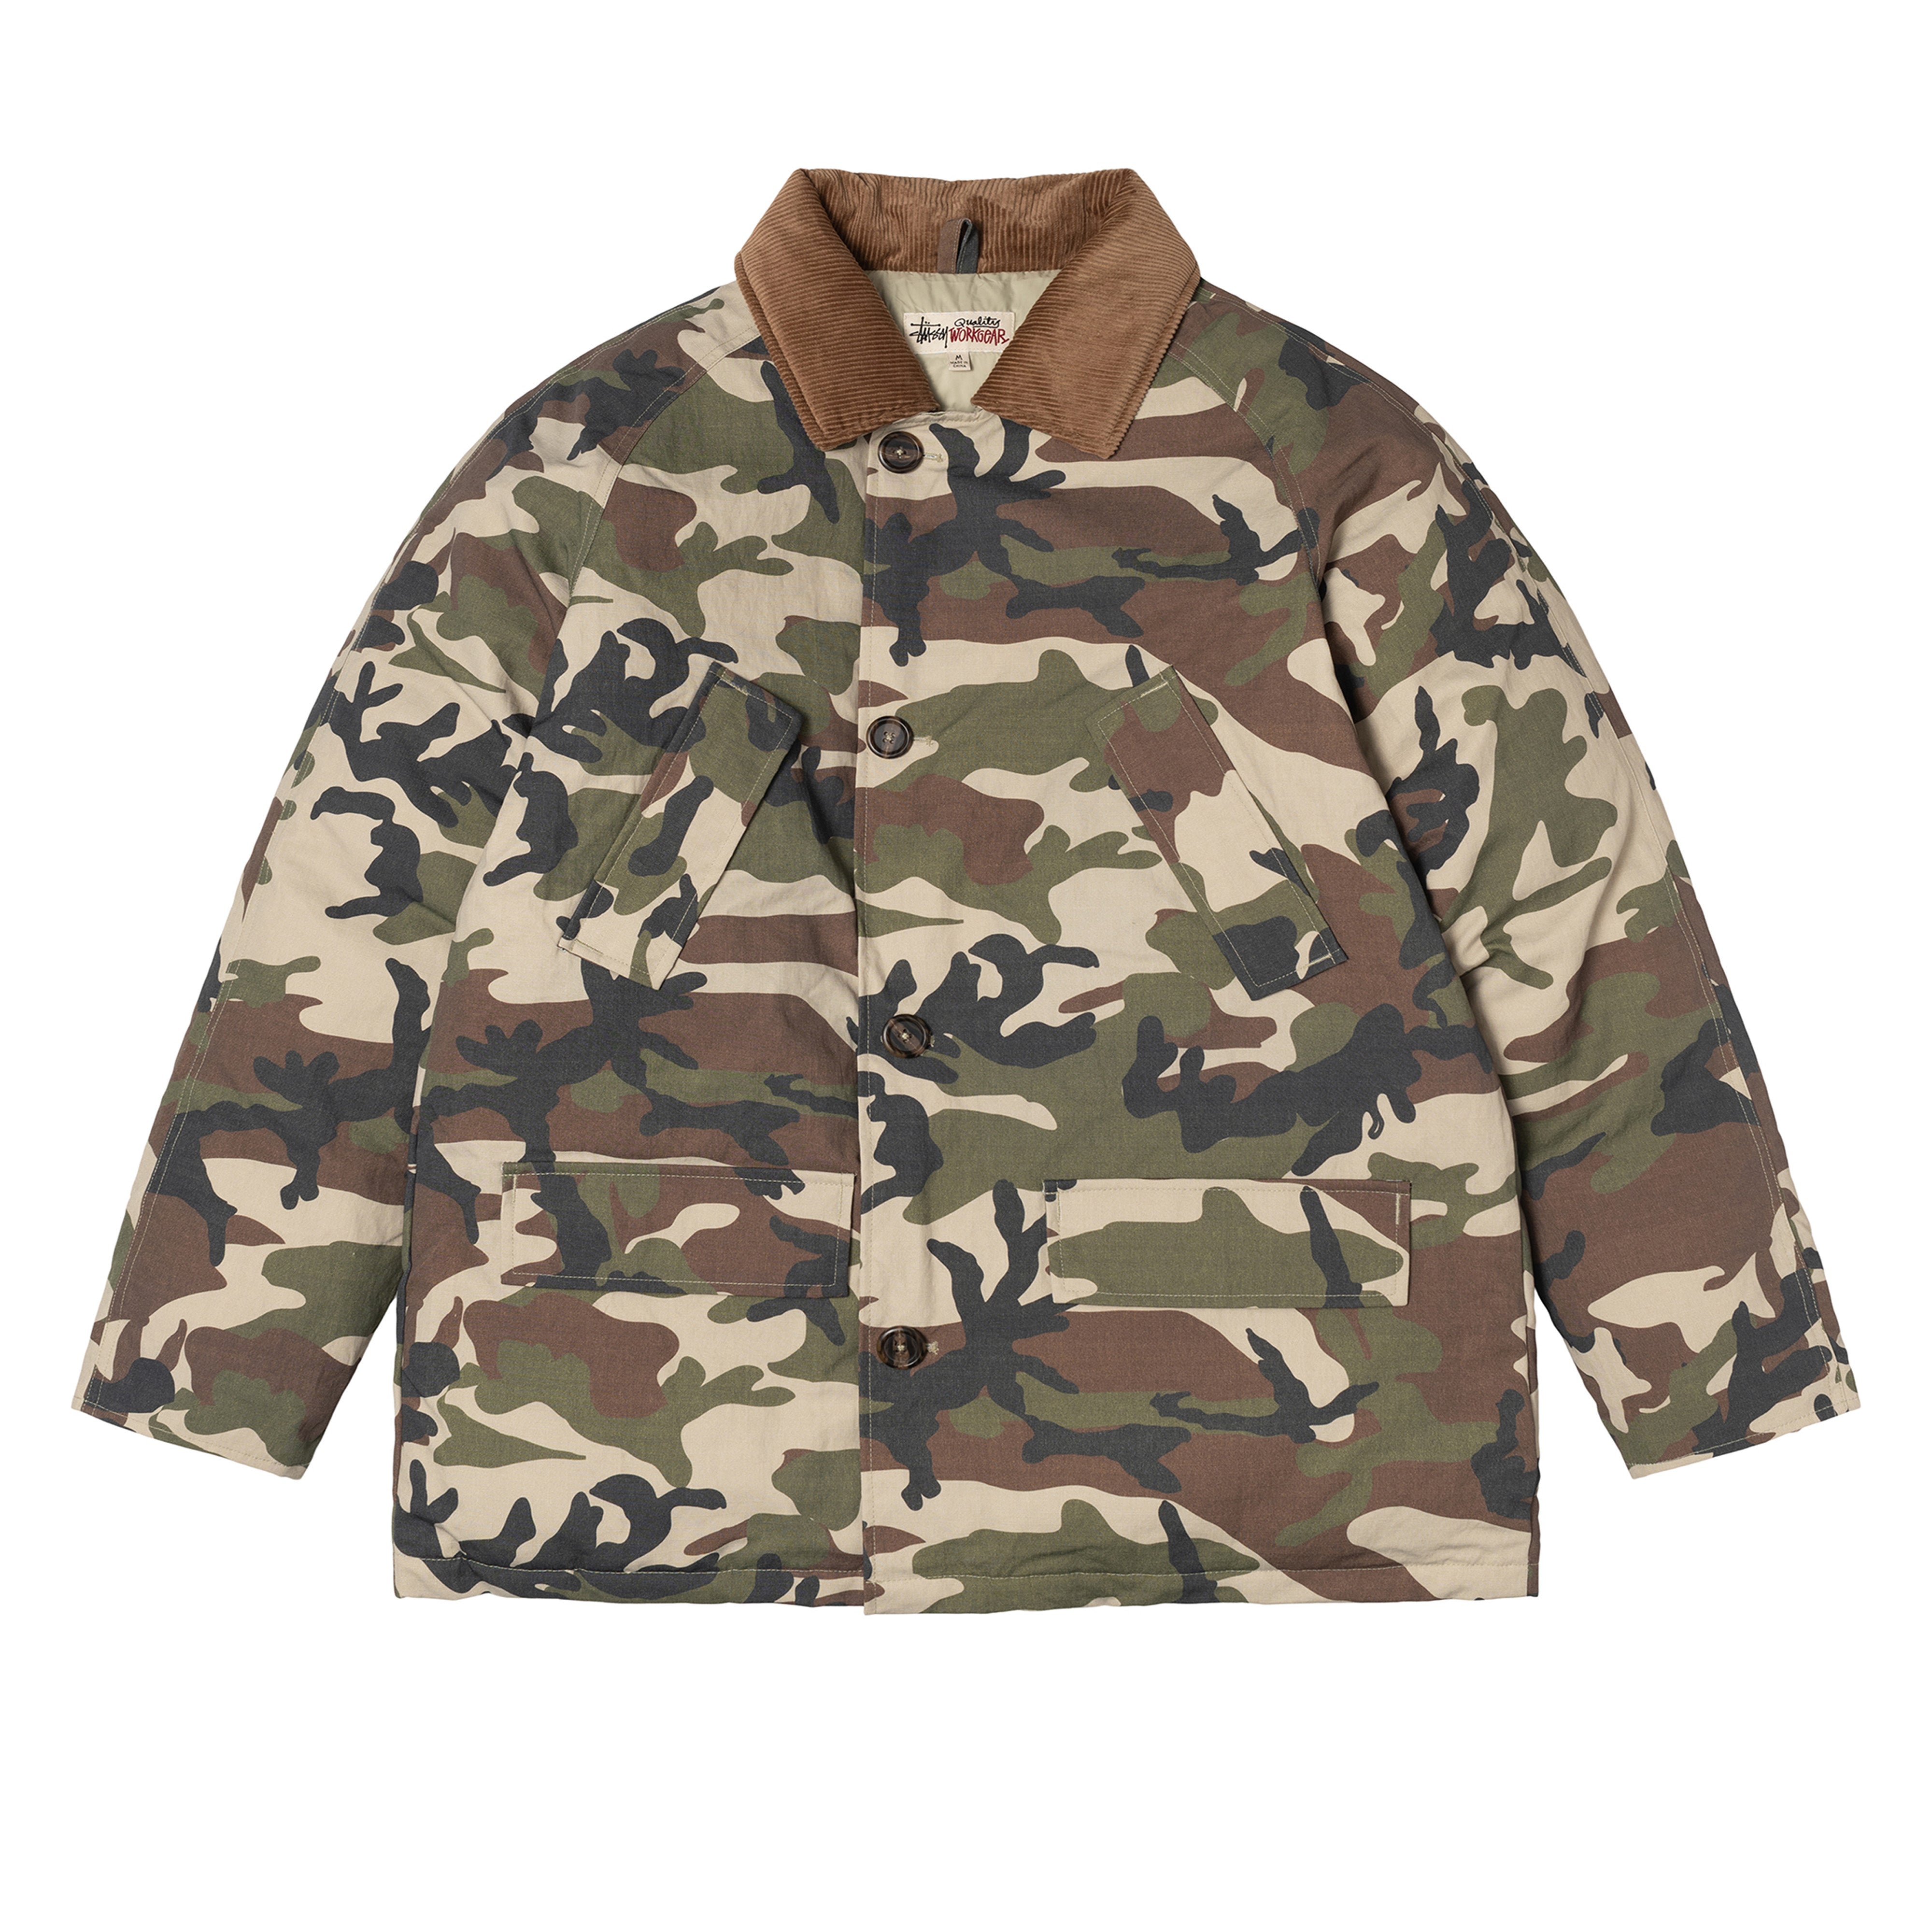 Denim Tears - Stüssy Ripstop Camouflage Army Jacket - (Camouflage)